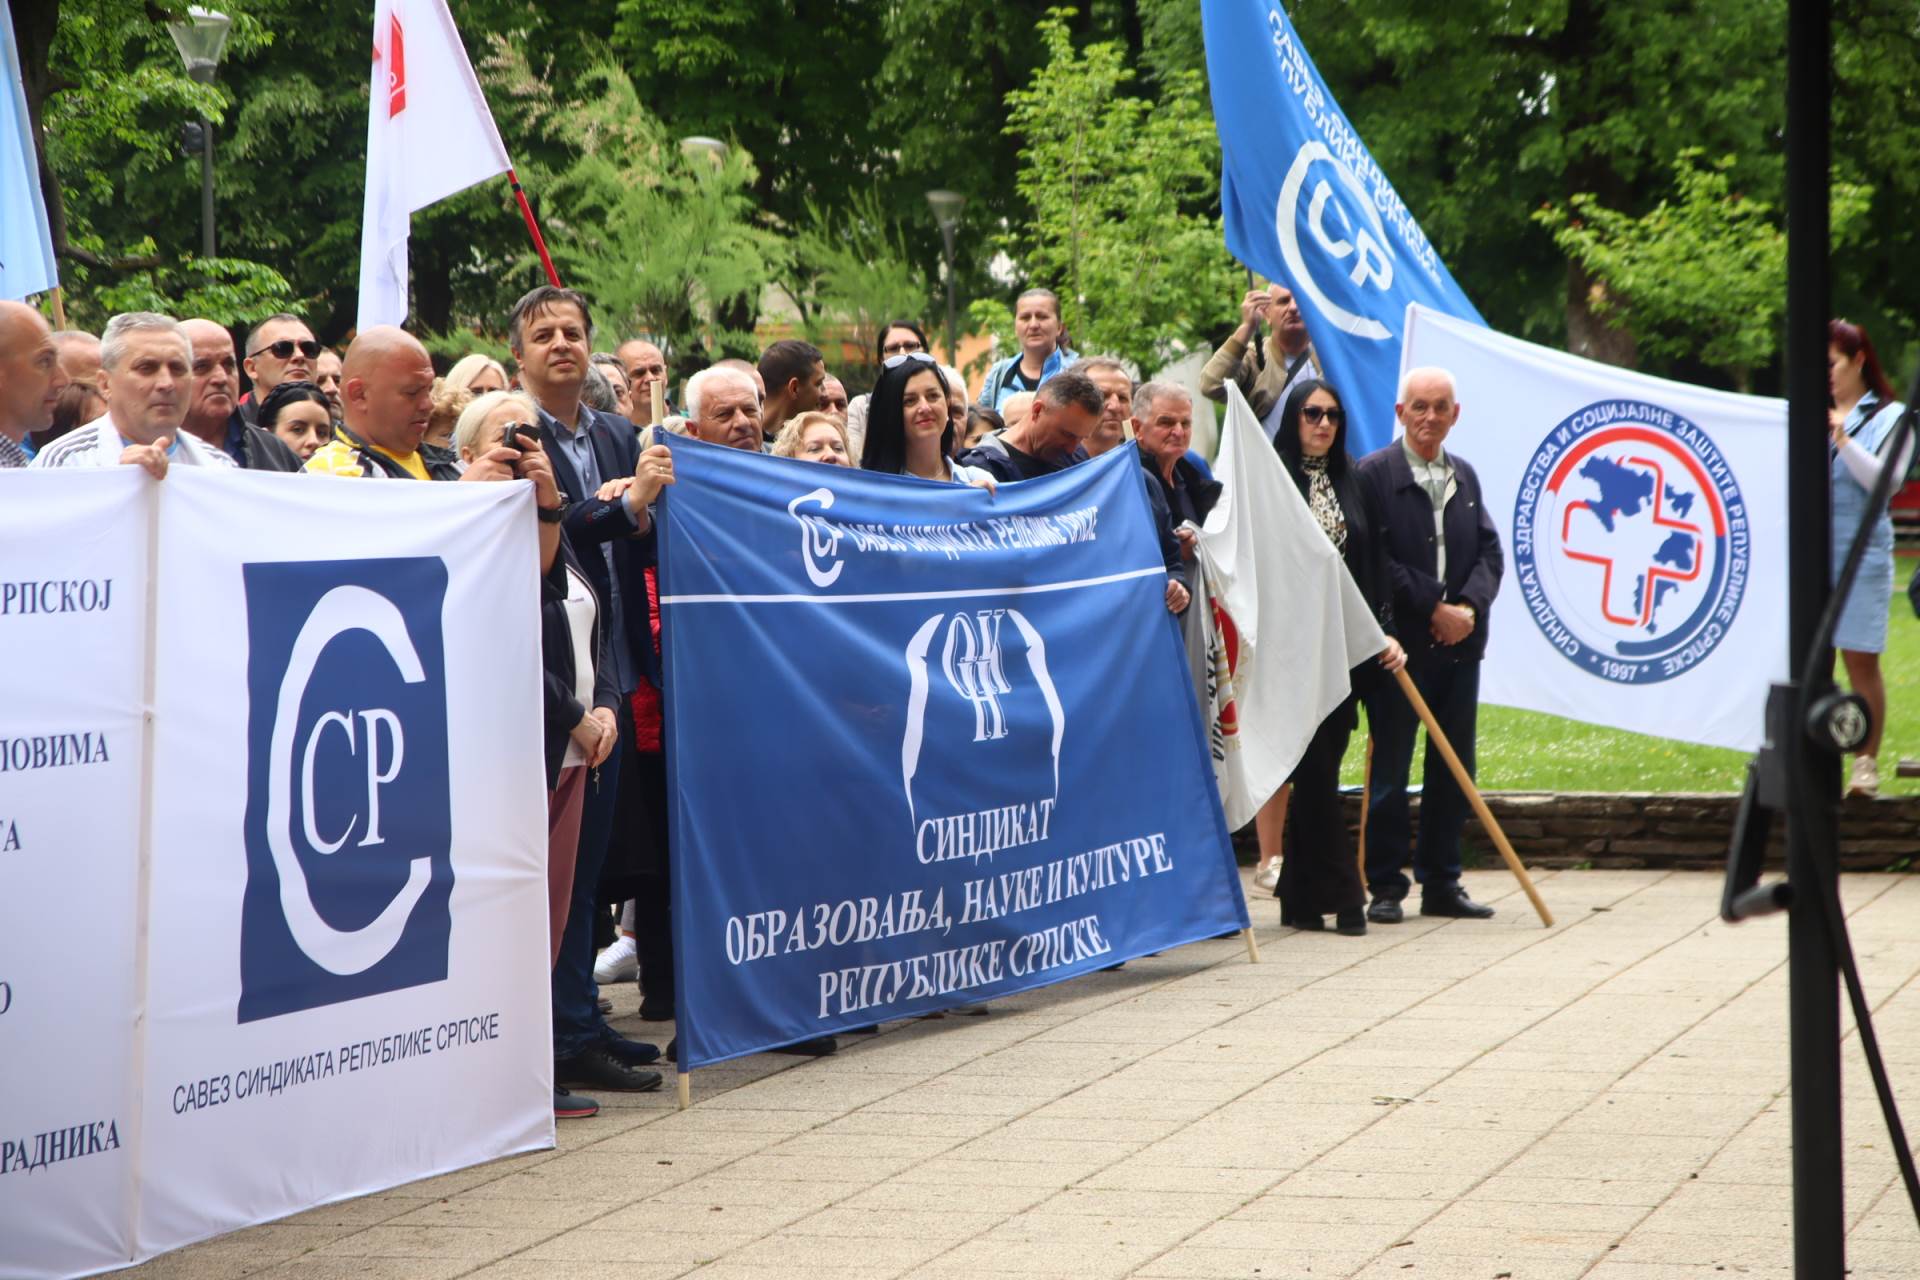  Protest sindikatlija u Banjaluci za 1. maj 